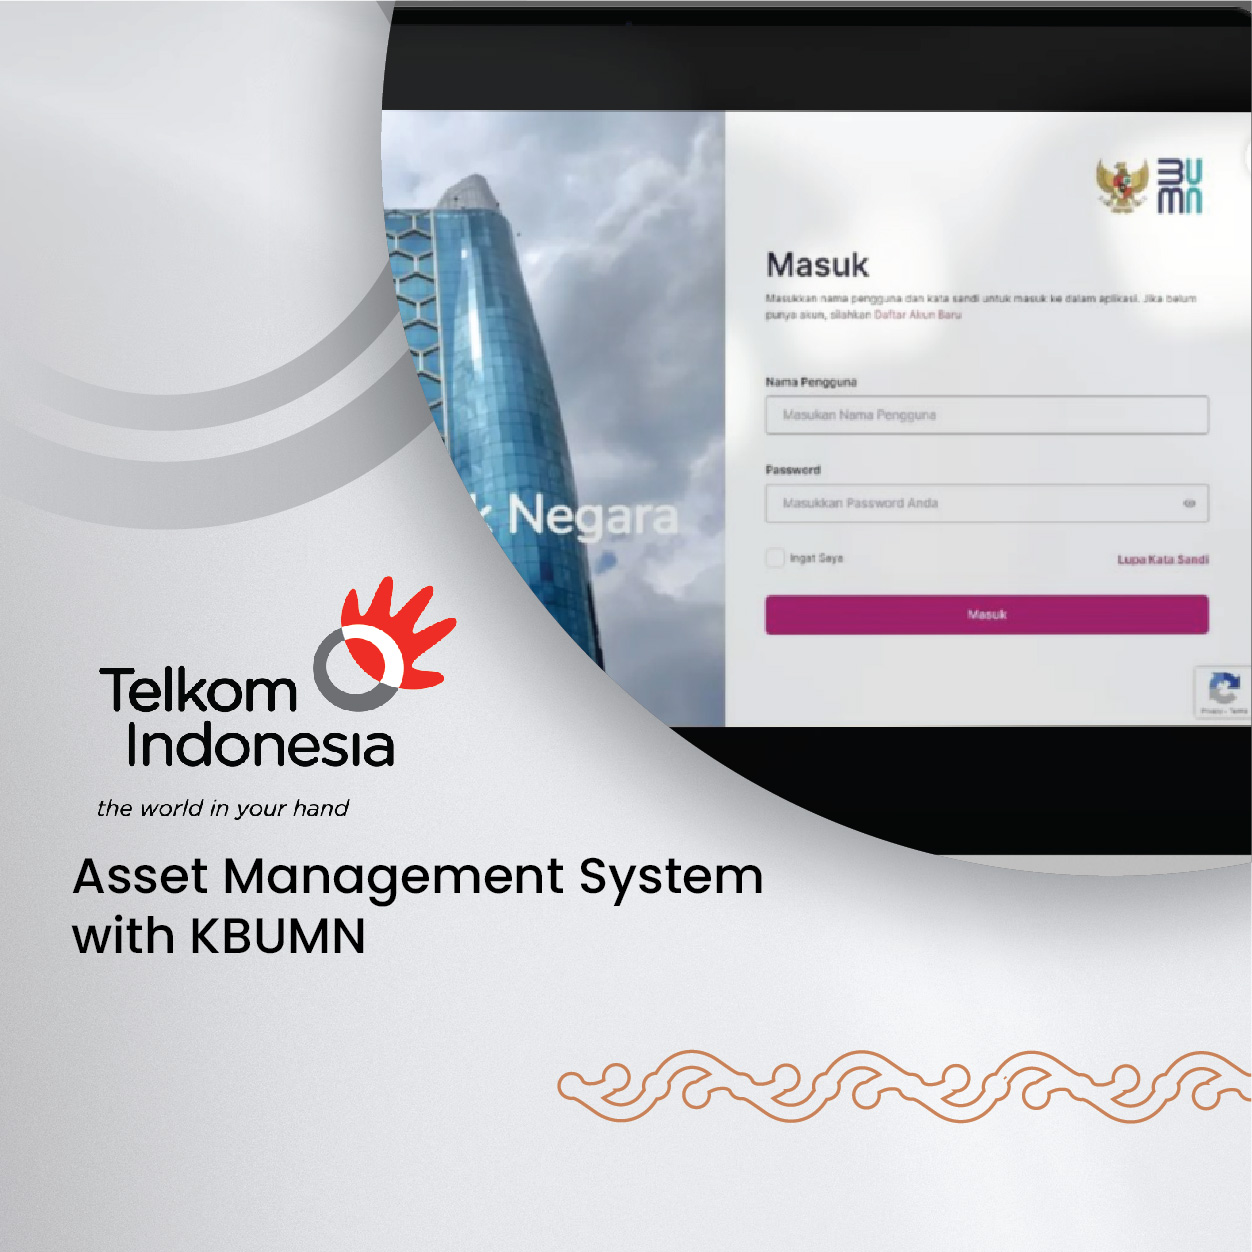 Telkom Indonesia & KBUMN